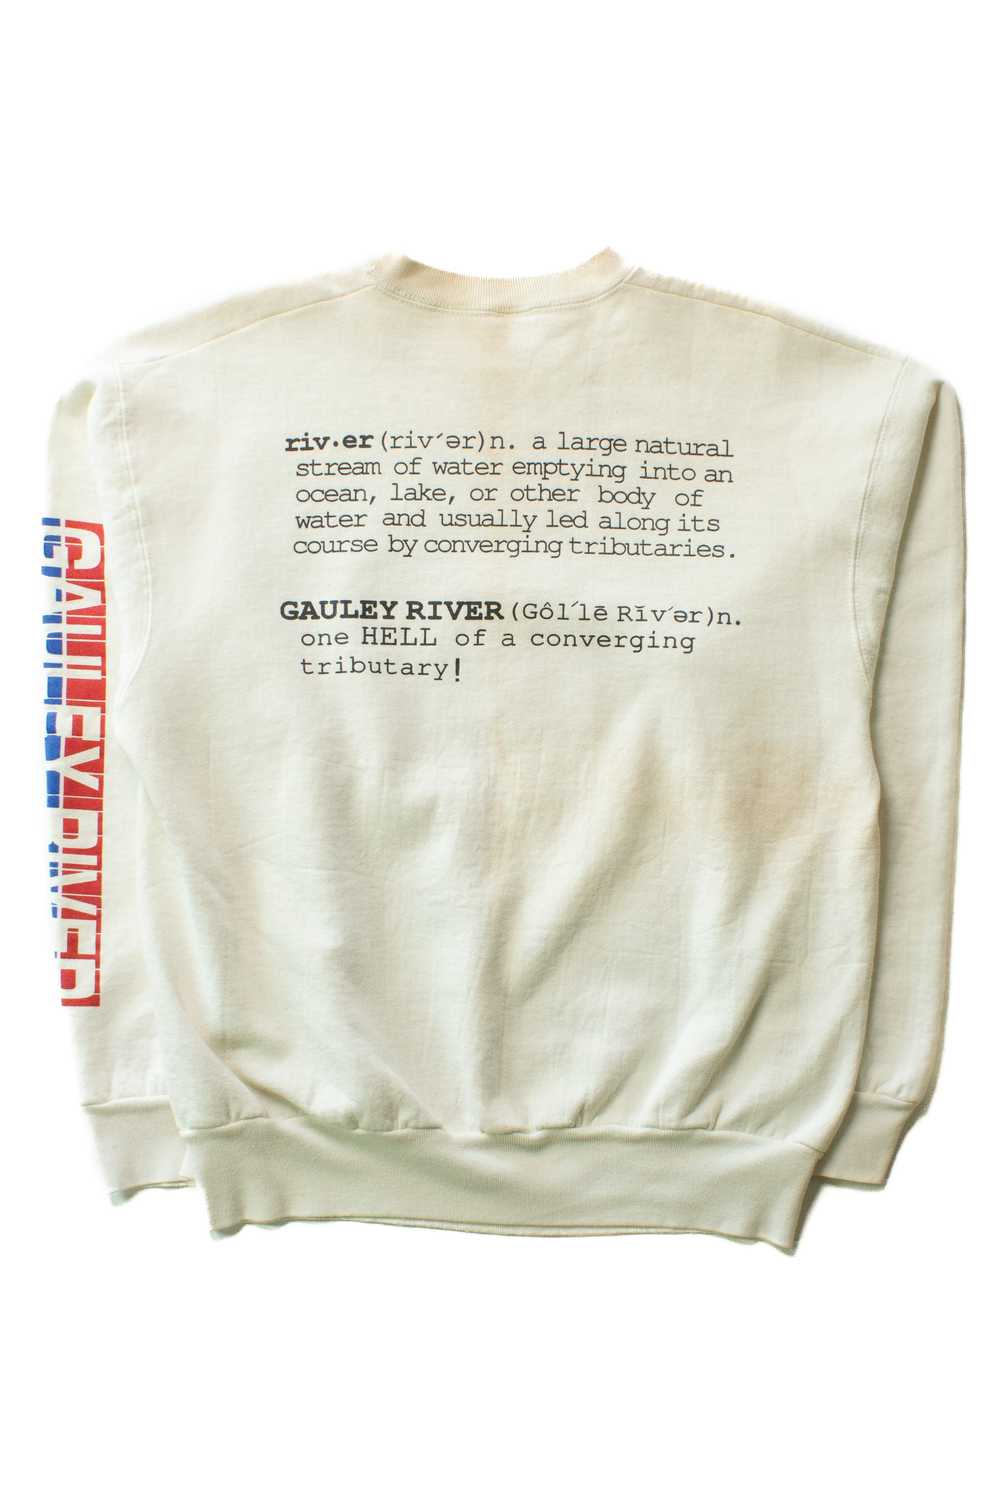 Vintage Gauley River Whitewater Sweatshirt (1990s) - image 2